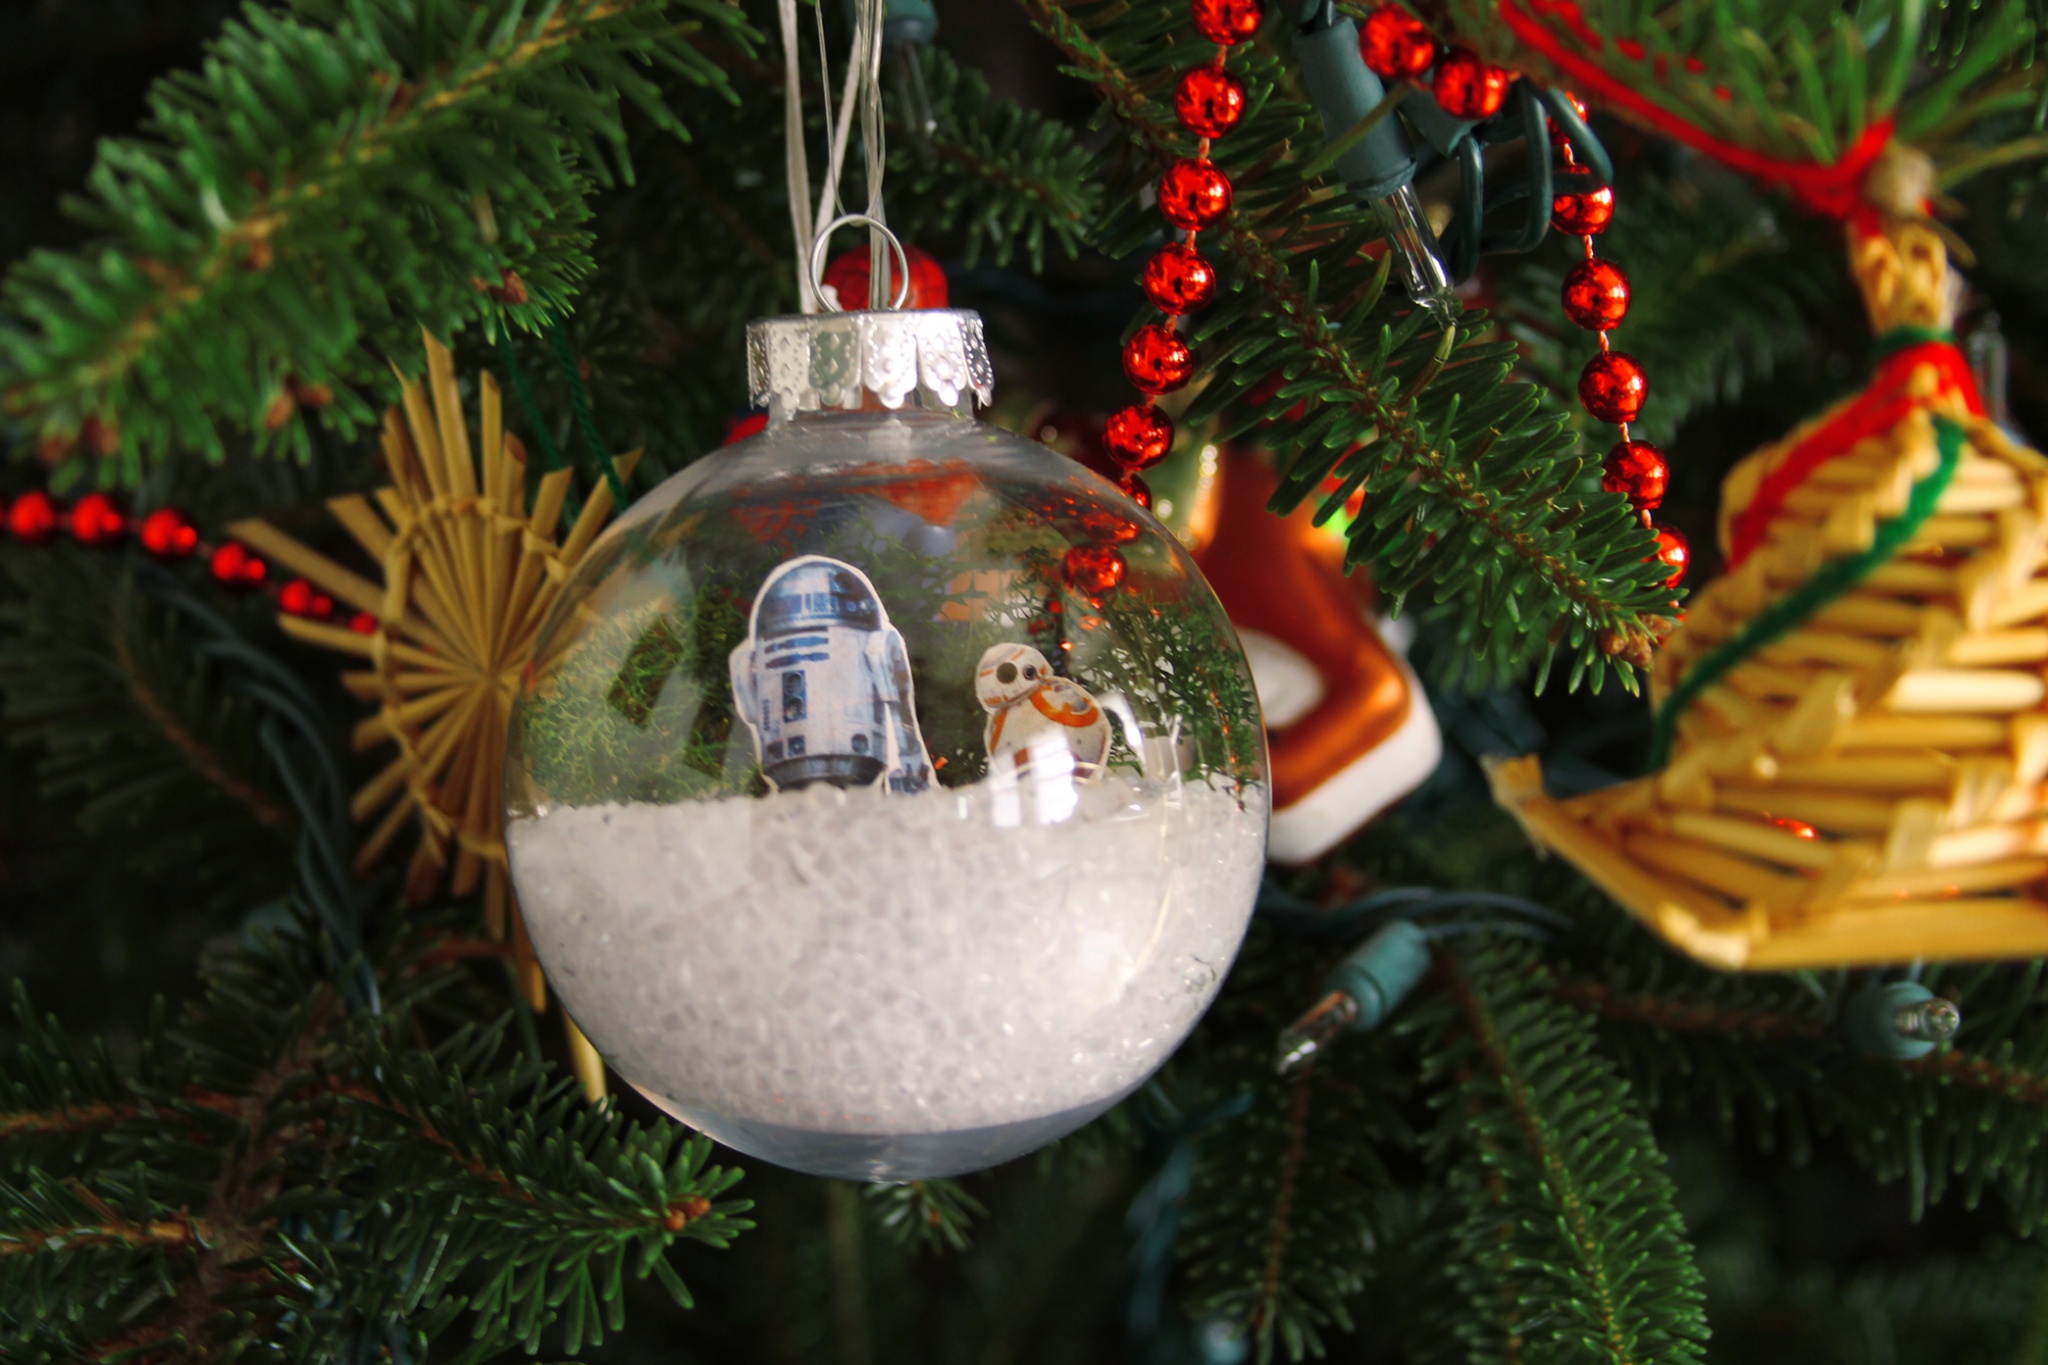 DIY Christmas Decoration Star Wars 